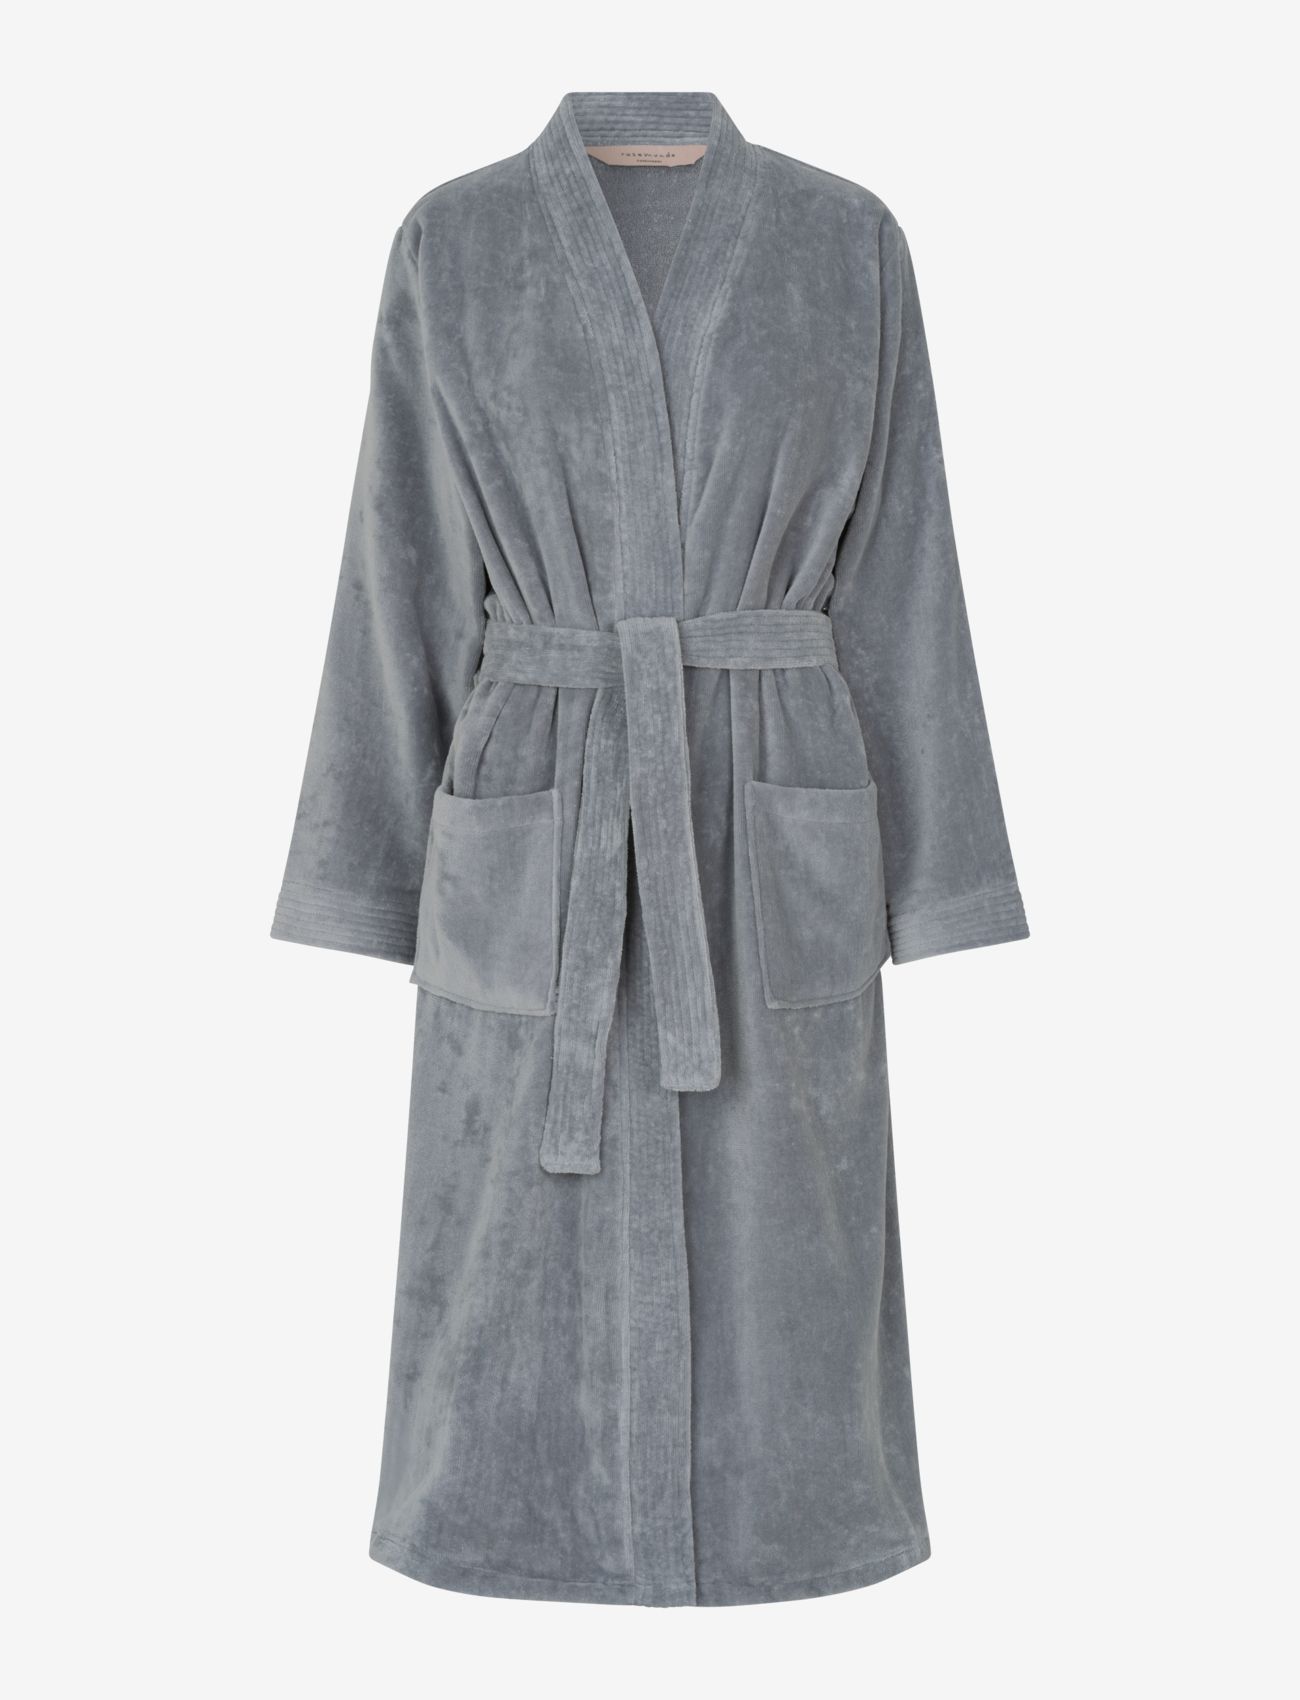 Rosemunde - Organic robe - sorteren op prijs - charcoal grey - 0